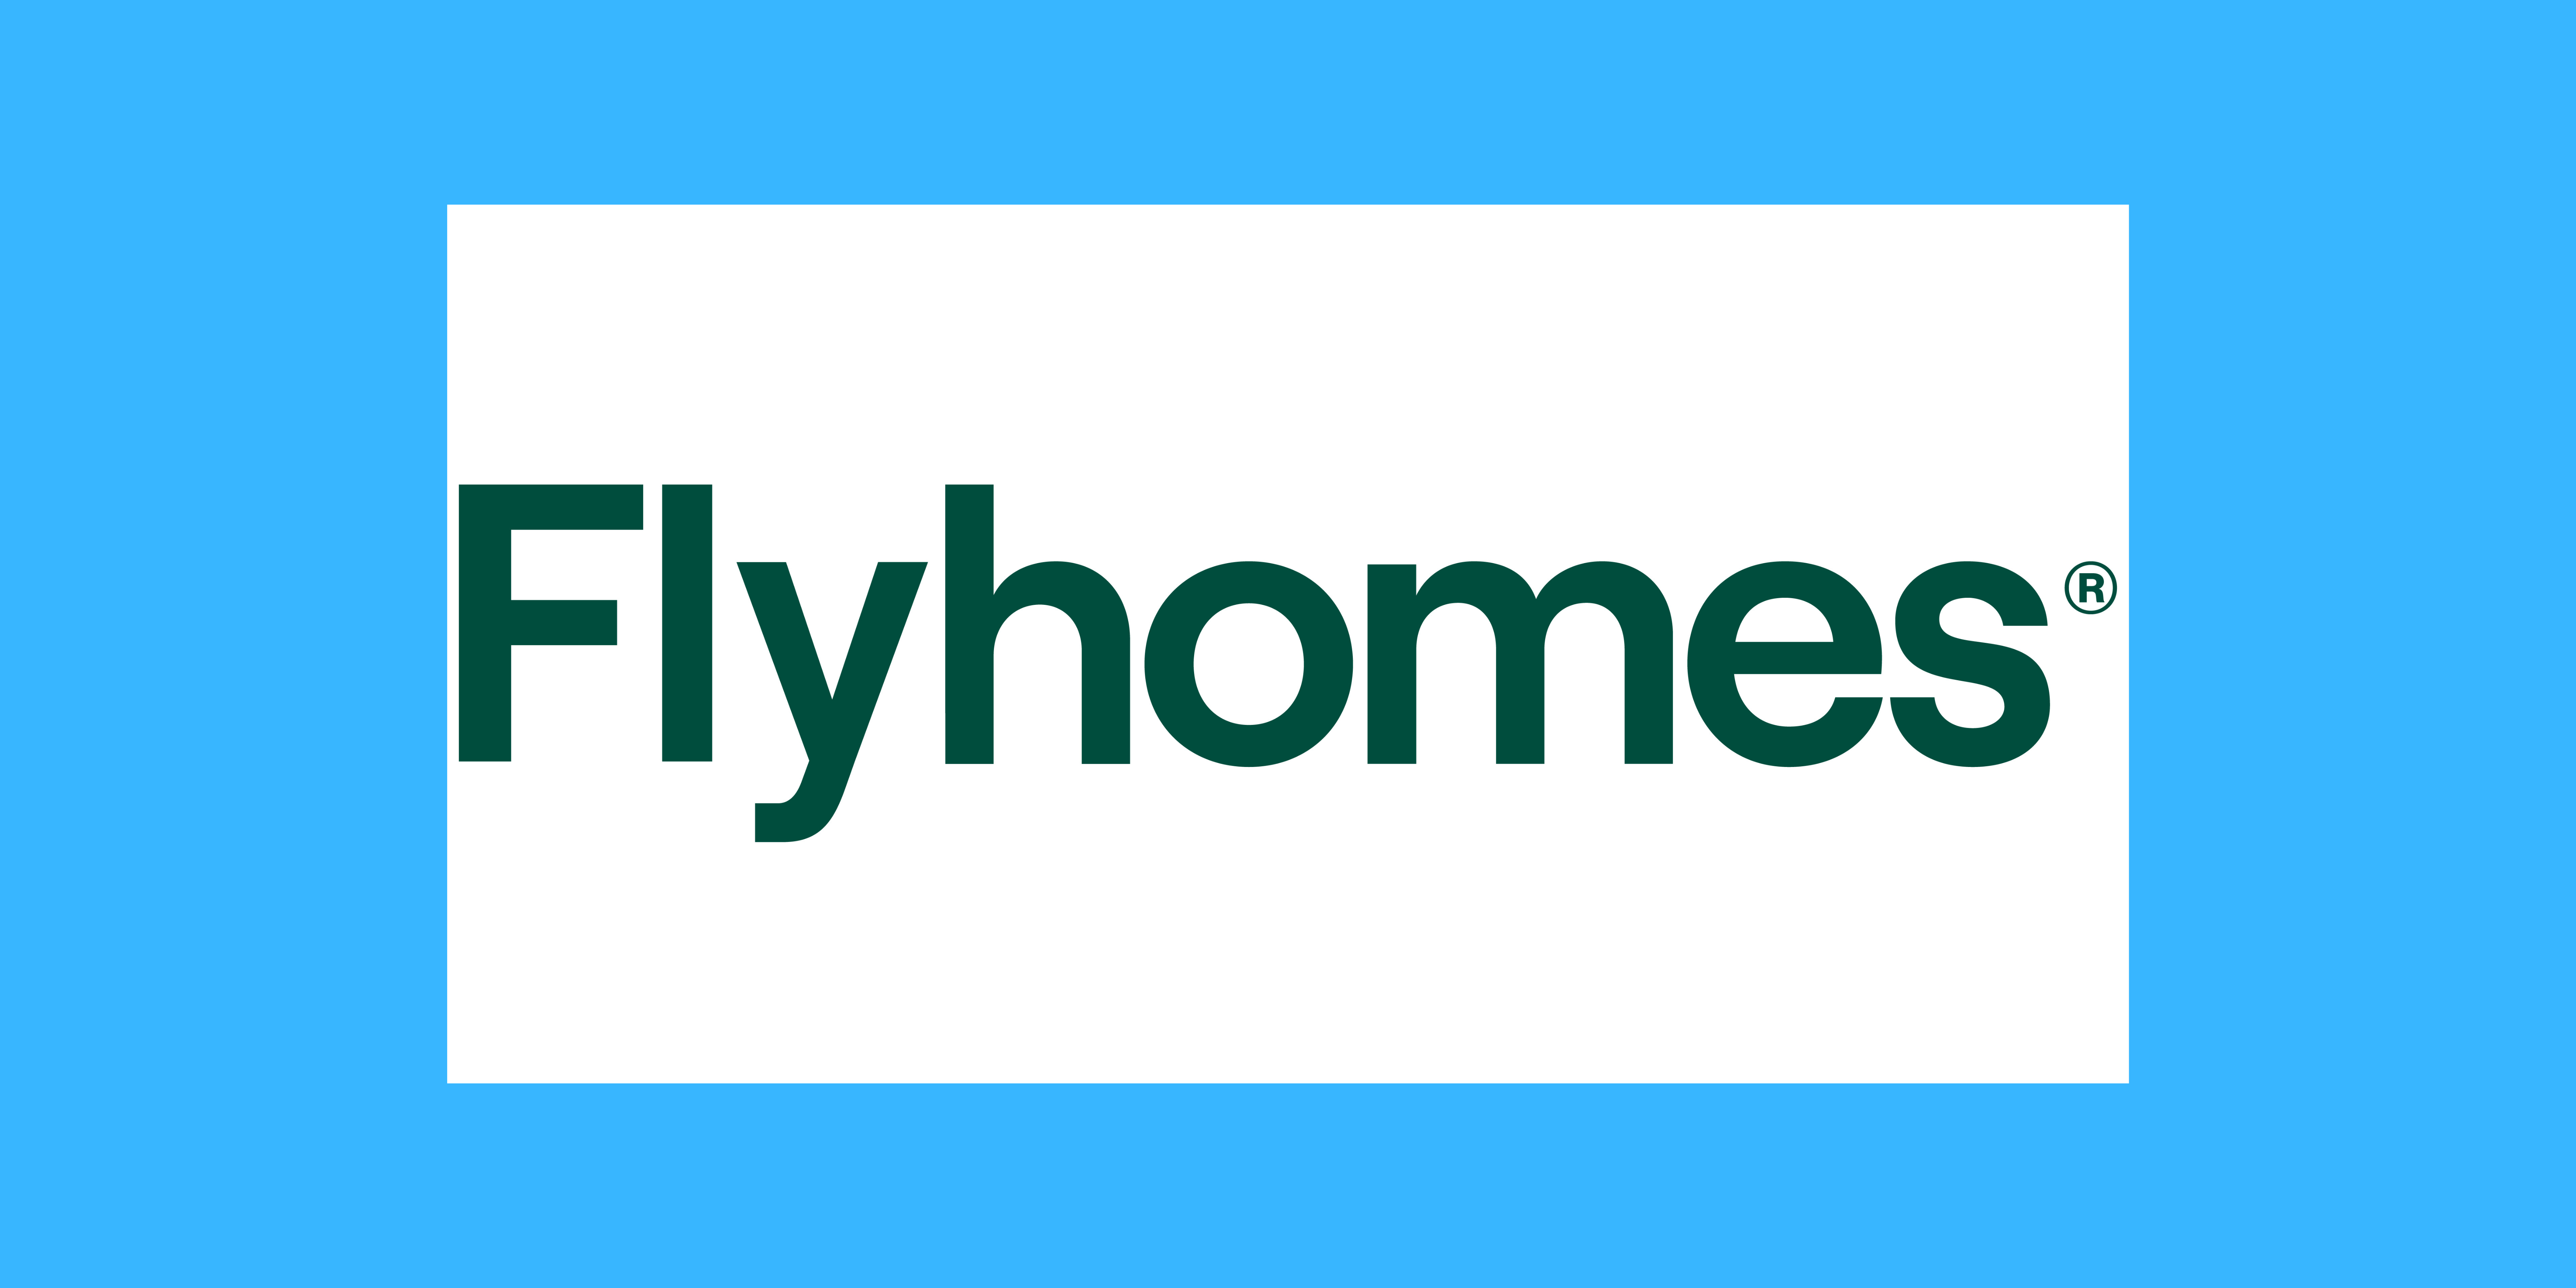 Flyhomes Announces Two Exec Hires